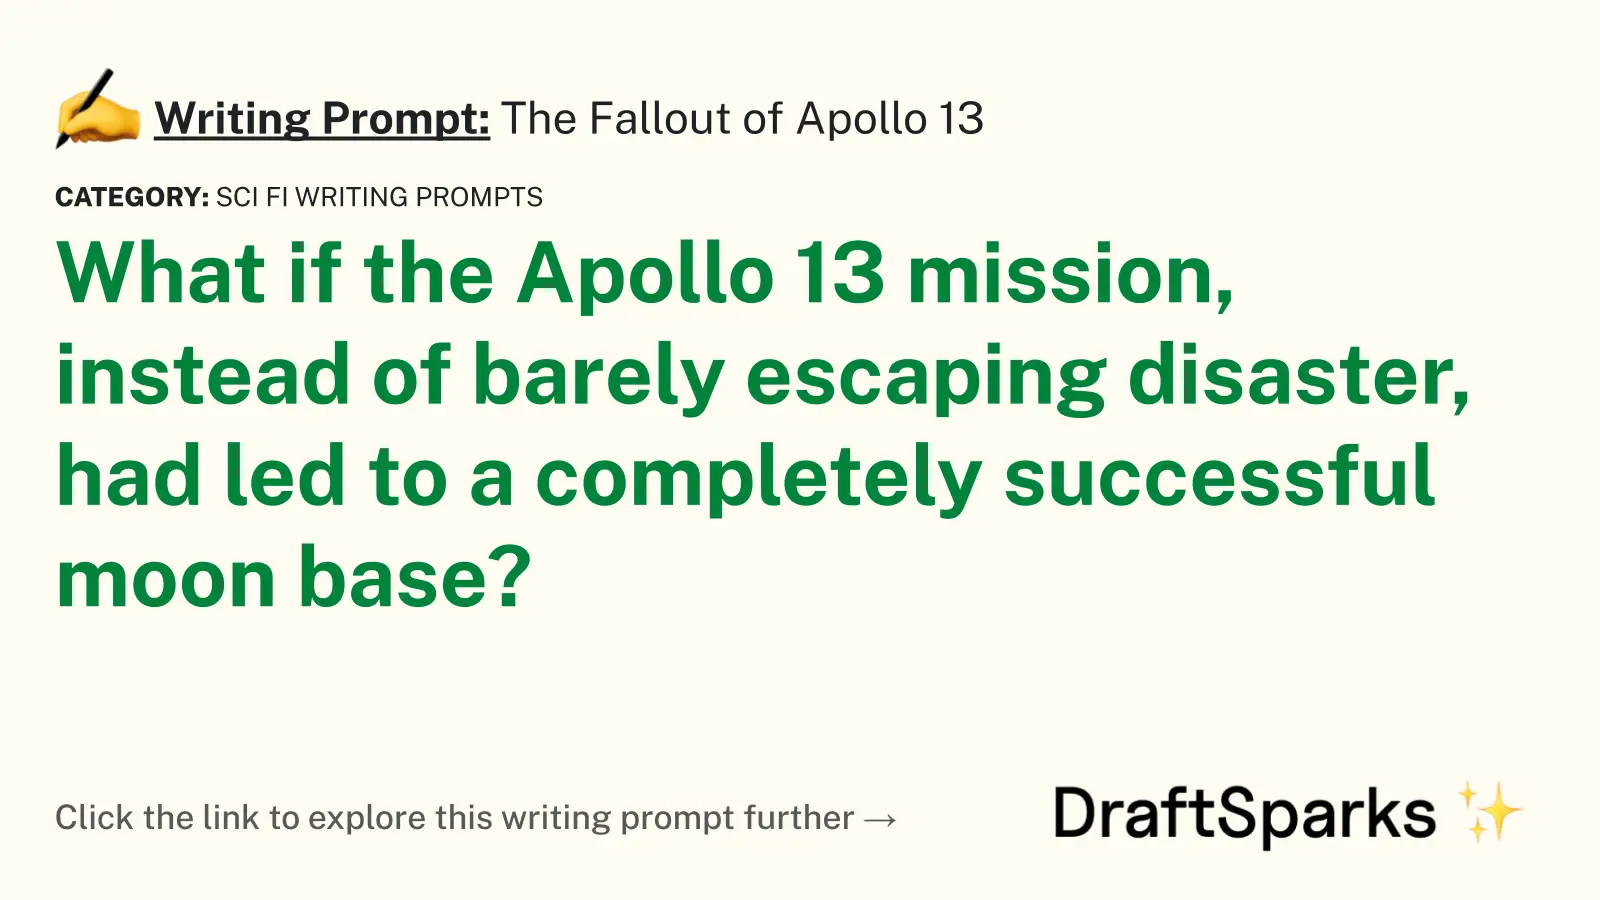 The Fallout of Apollo 13